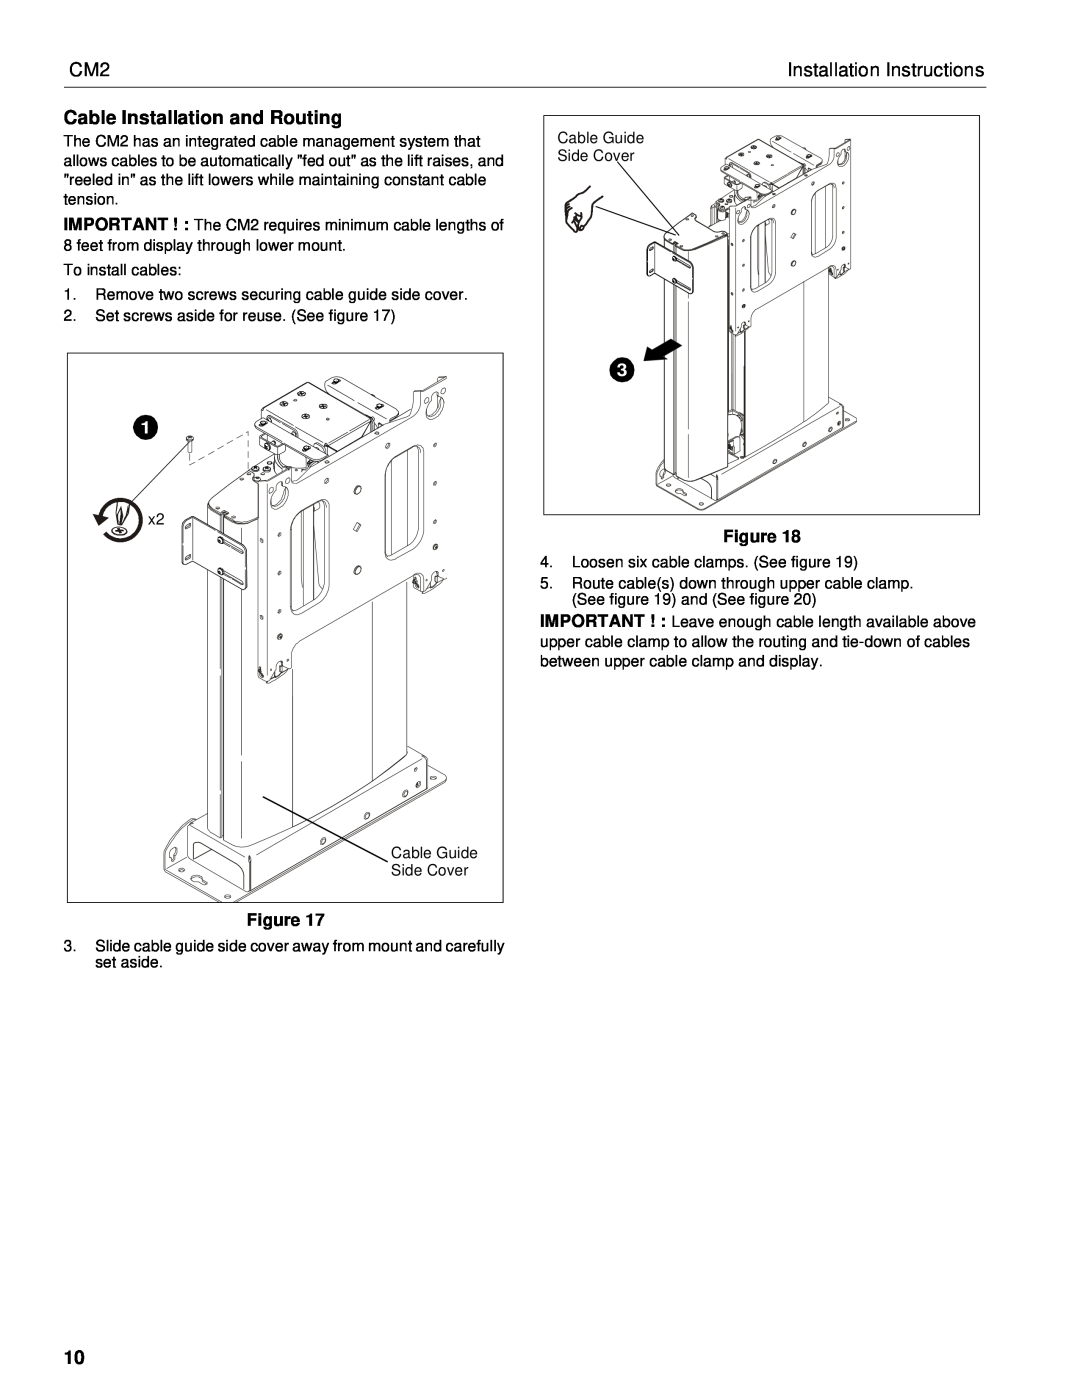 Chief Manufacturing CM2 installation instructions Cable Installation and Routing, Installation Instructions 